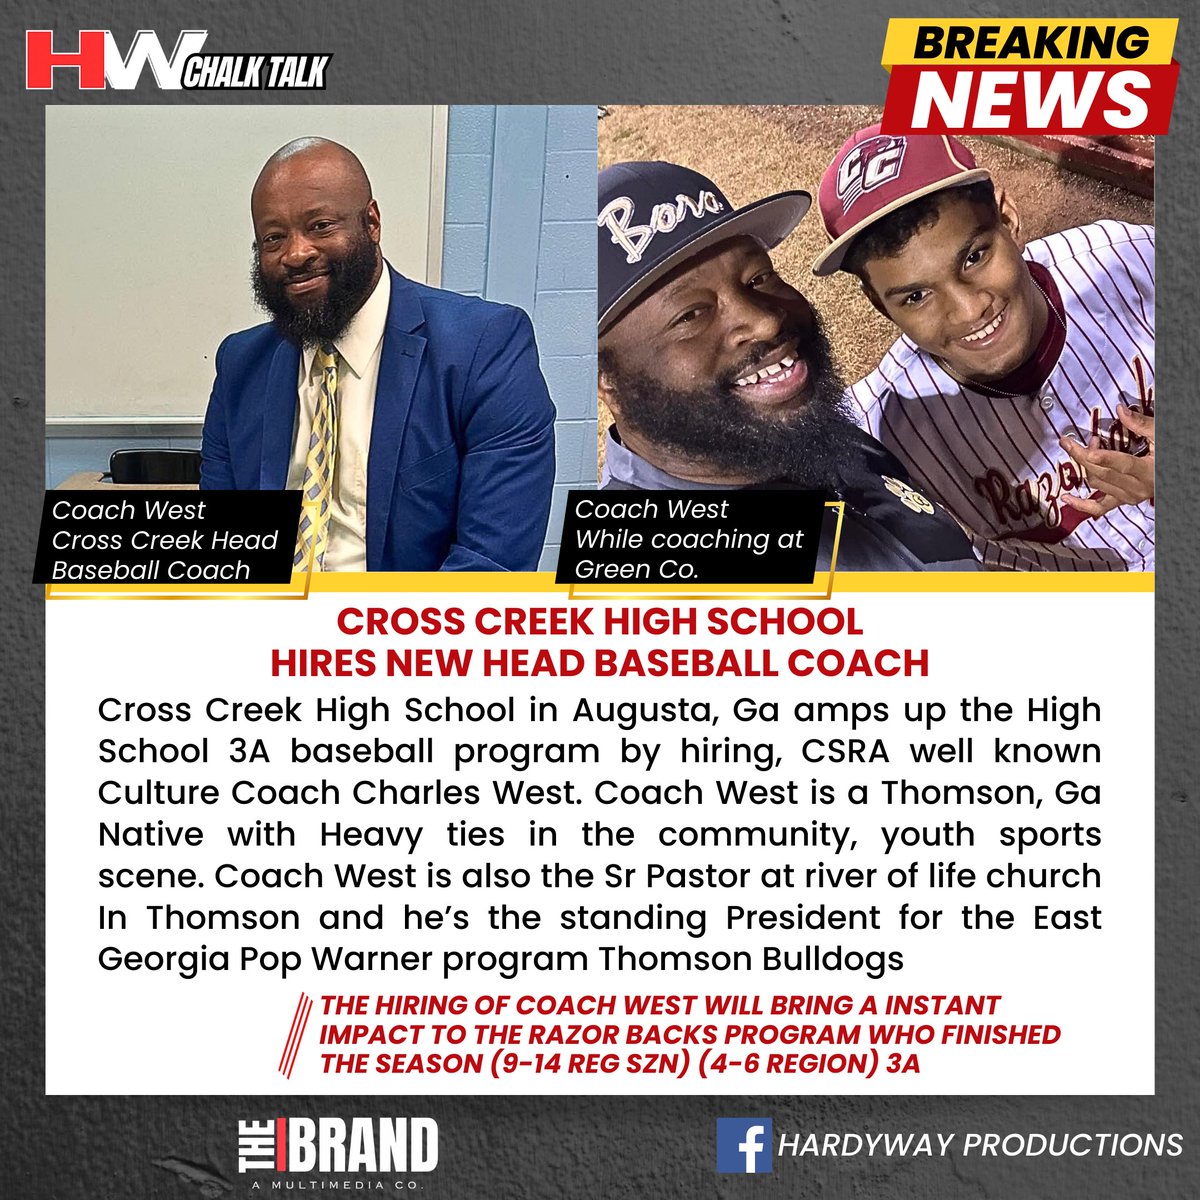 #HWCHALKTALK 📝 Congrats Coach West I’m sure Cross Creek Baseball Program is in great hands //THEBRAND